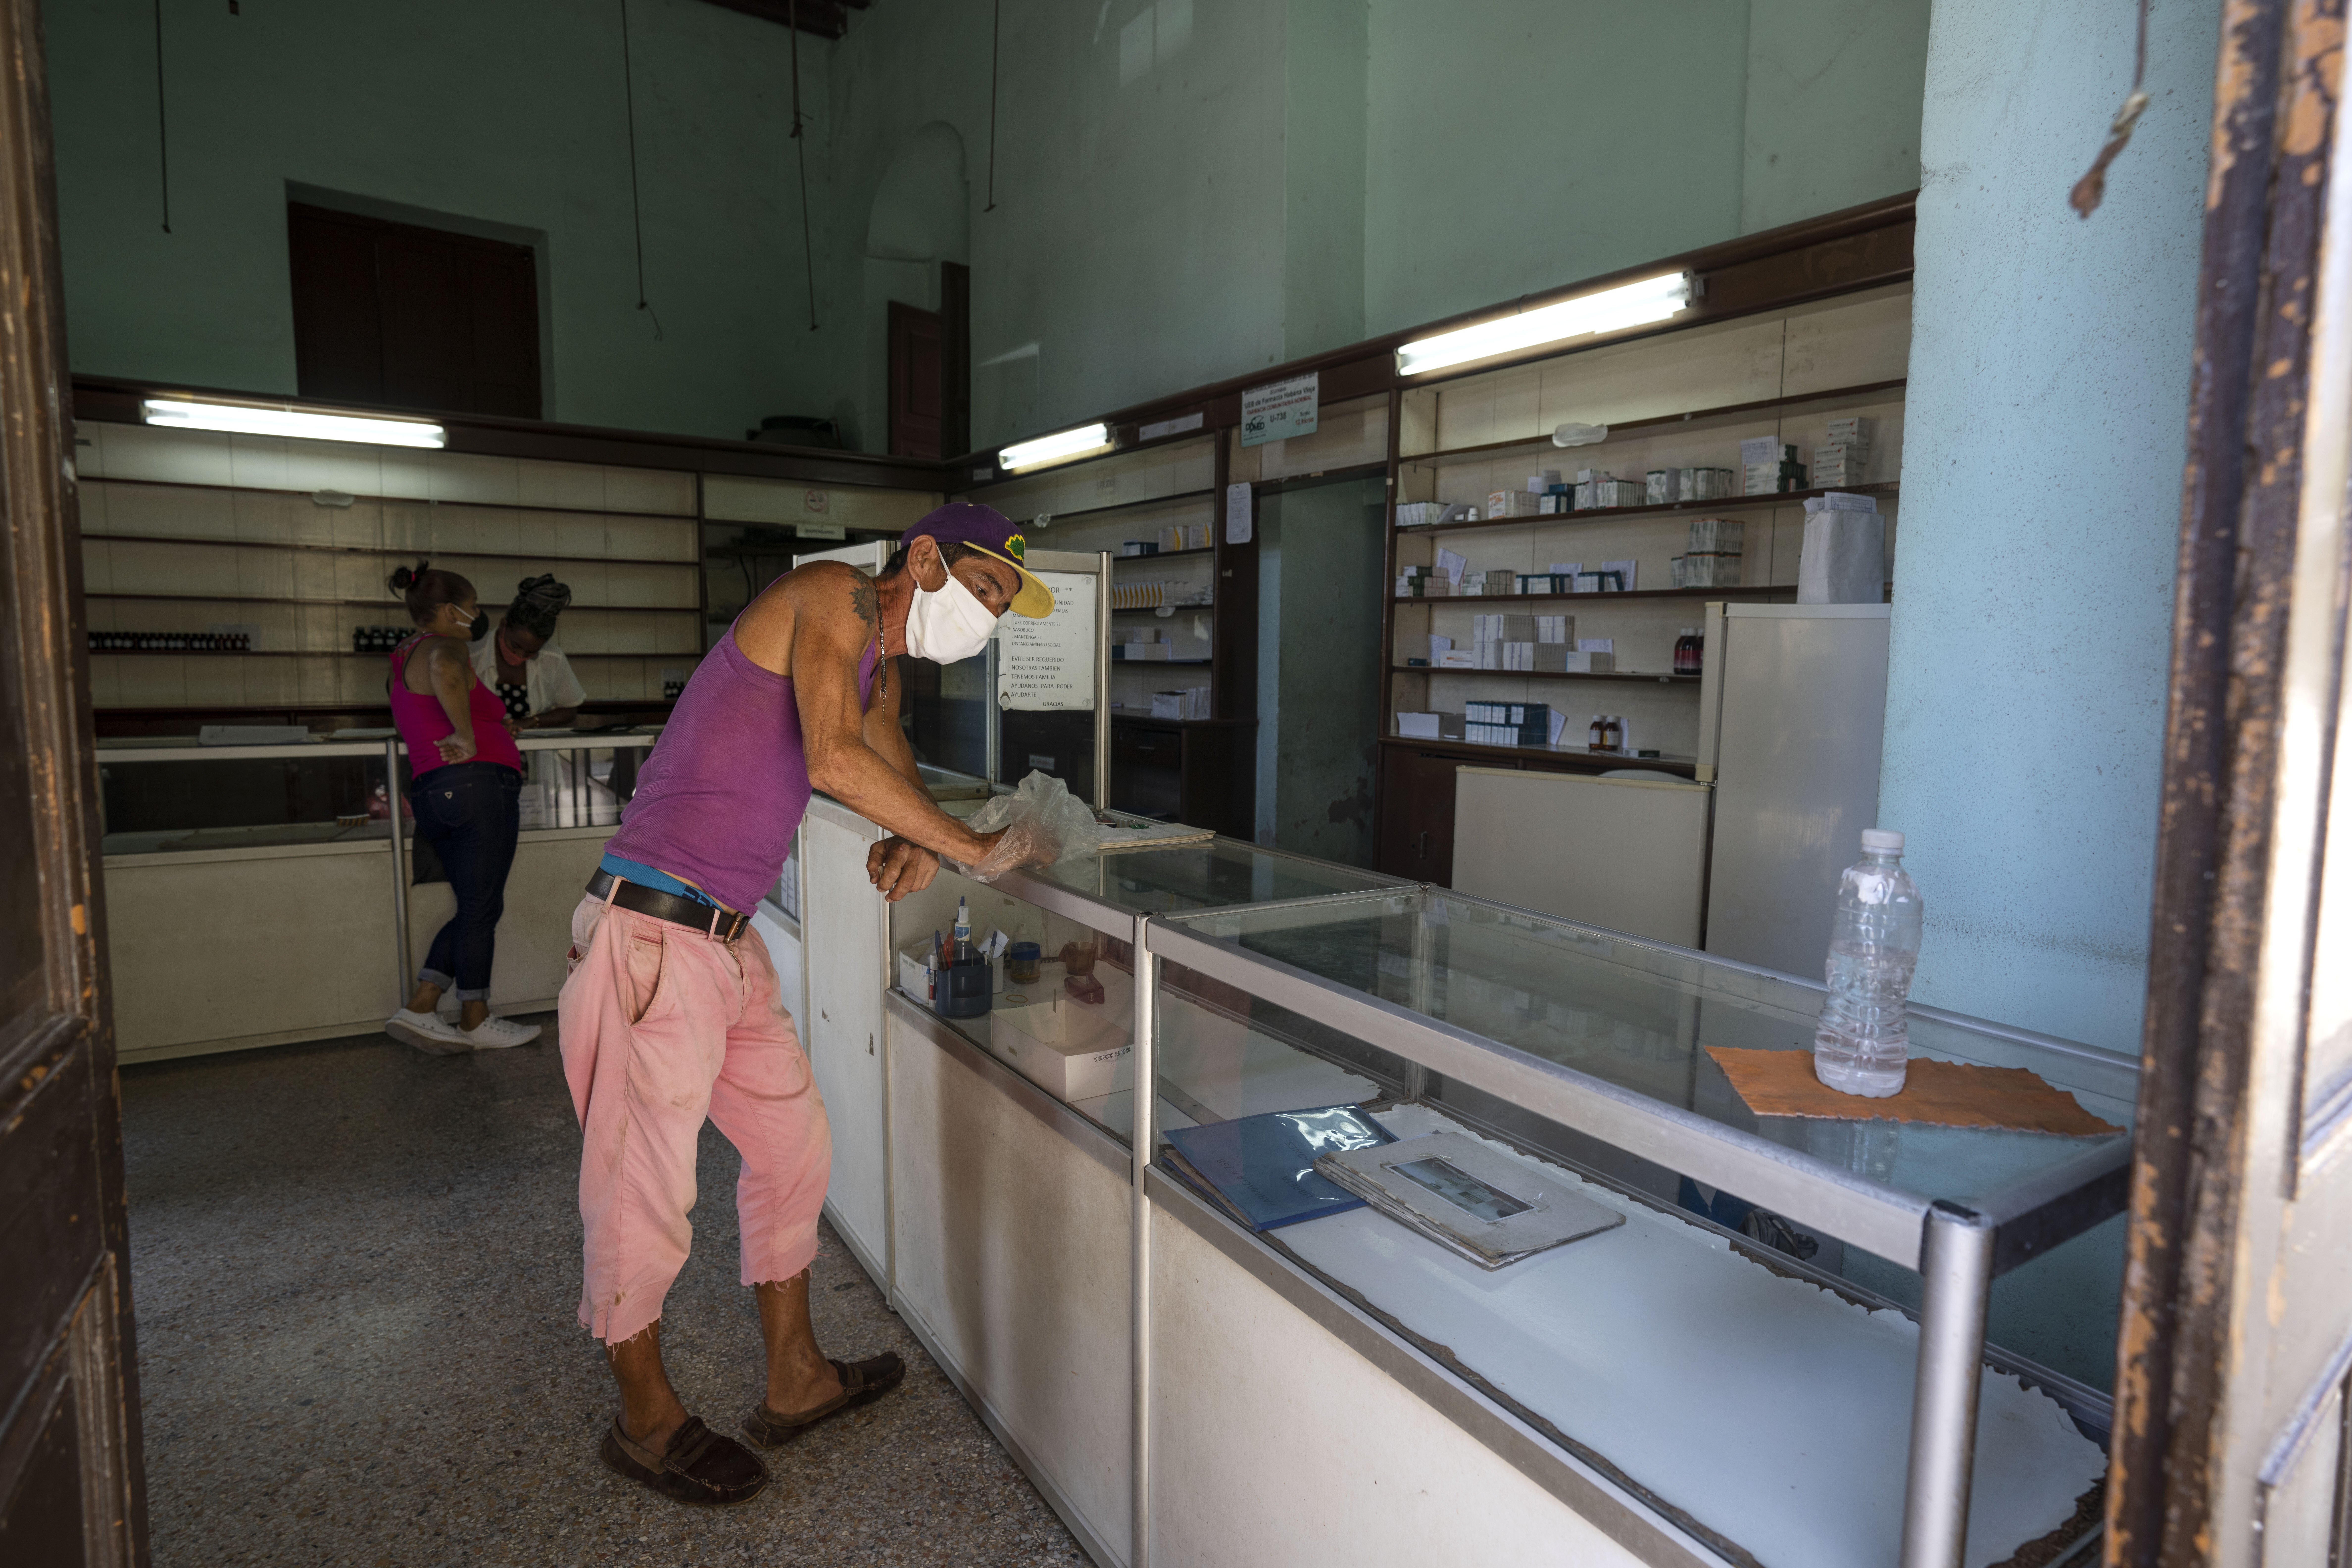 A pharmacy in Havana, Cuba. An economic crisis has seen shortages of basic goods. Photo: AP